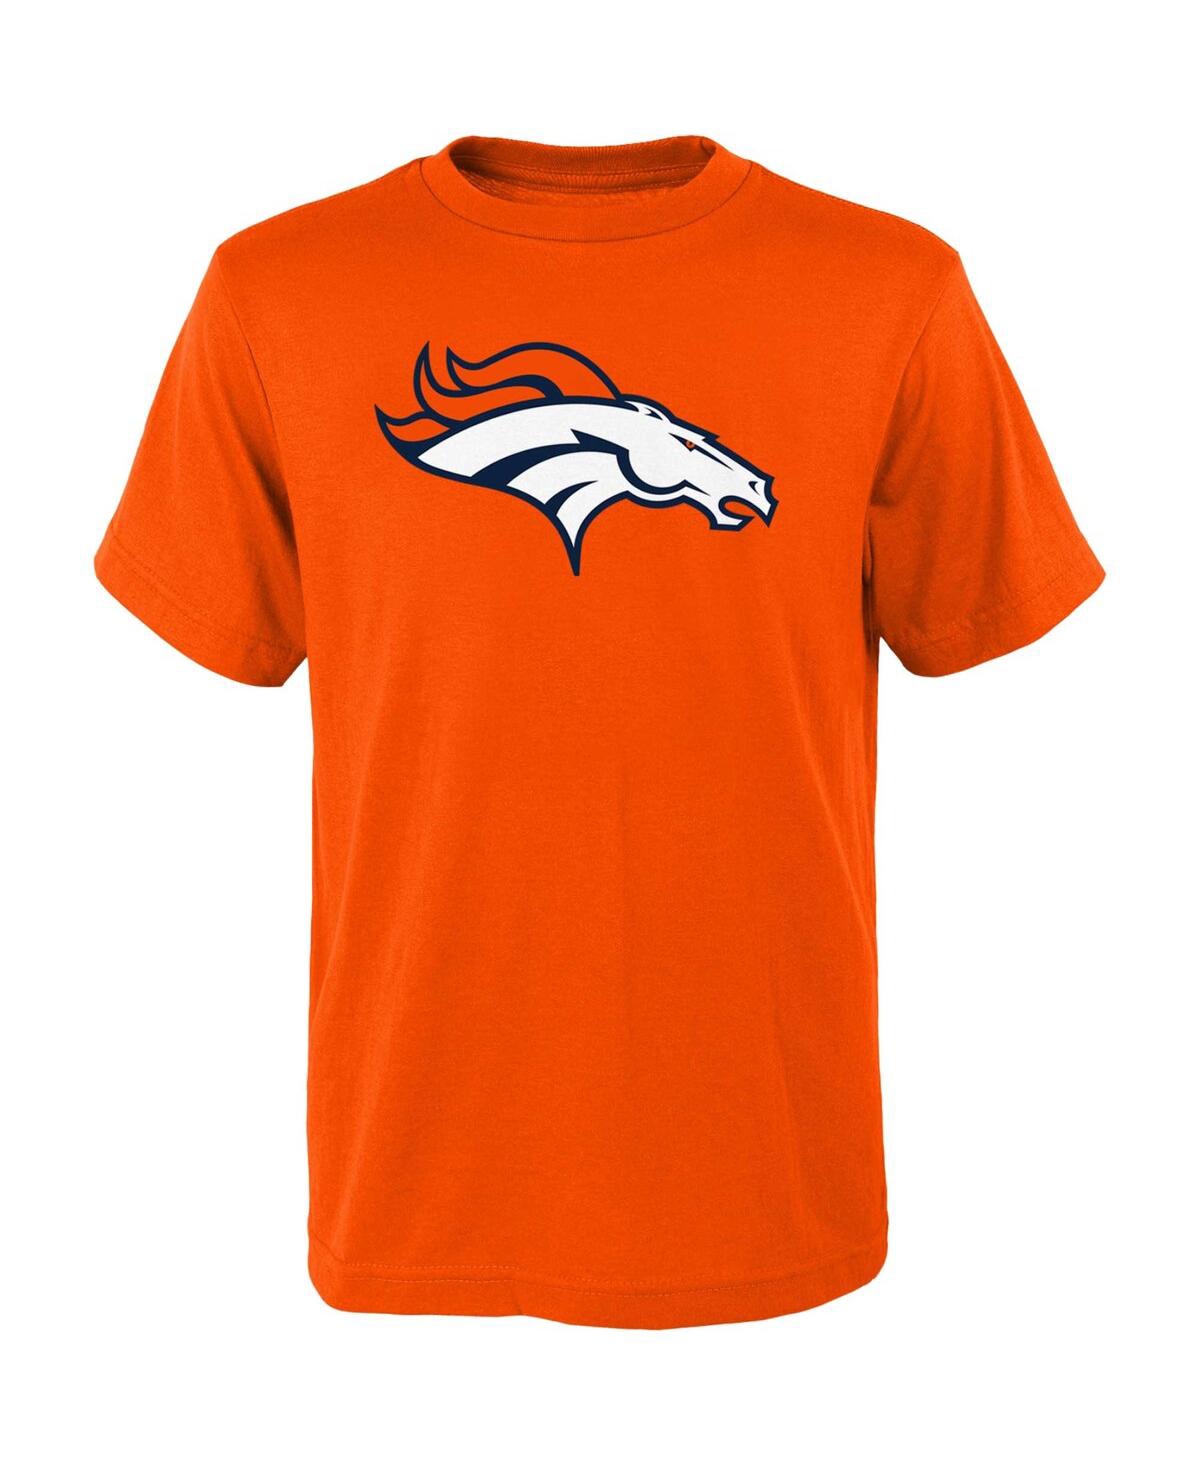 Outerstuff Kids' Big Boys Orange Denver Broncos Primary Logo T-shirt